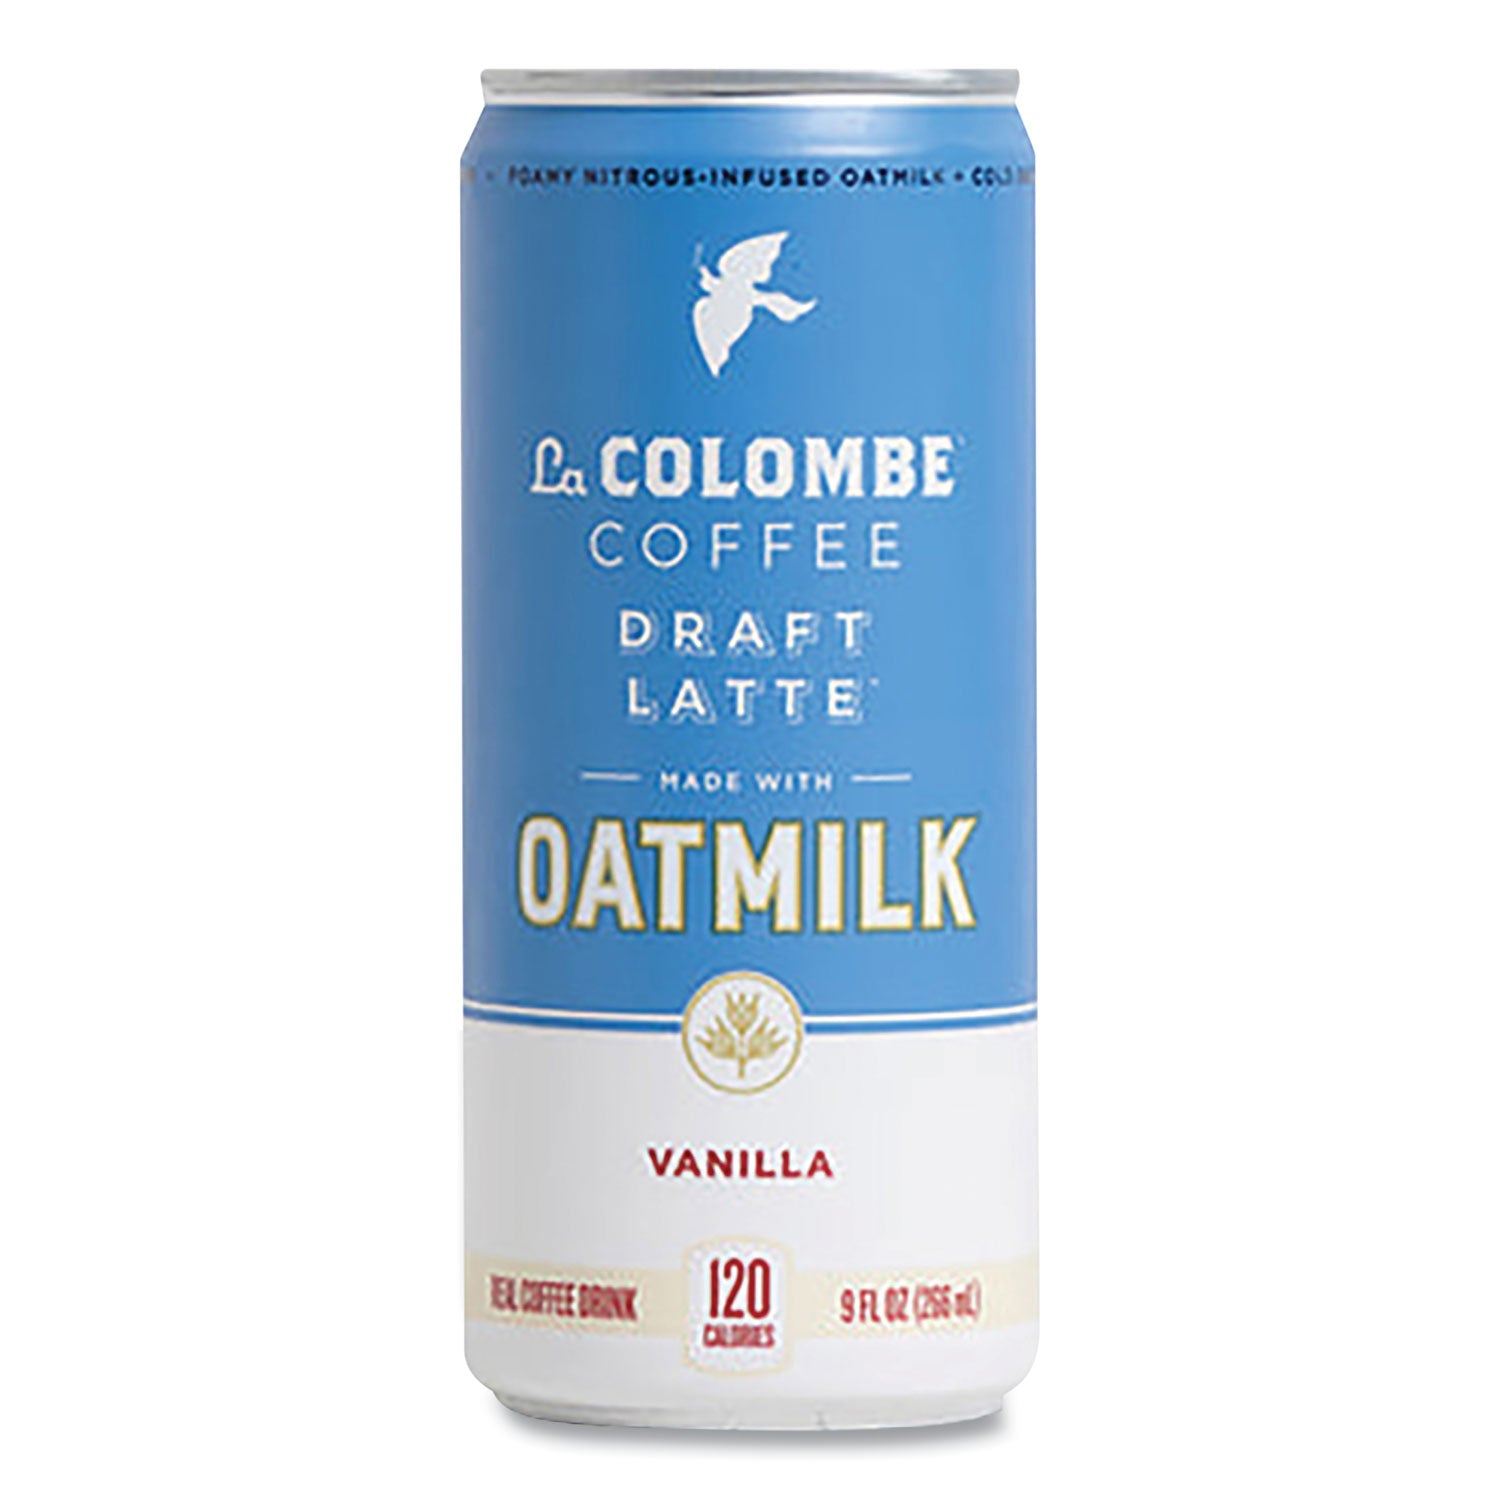 cold-brew-draft-latte-vanilla-9-oz-can-12-carton_lal02584 - 1